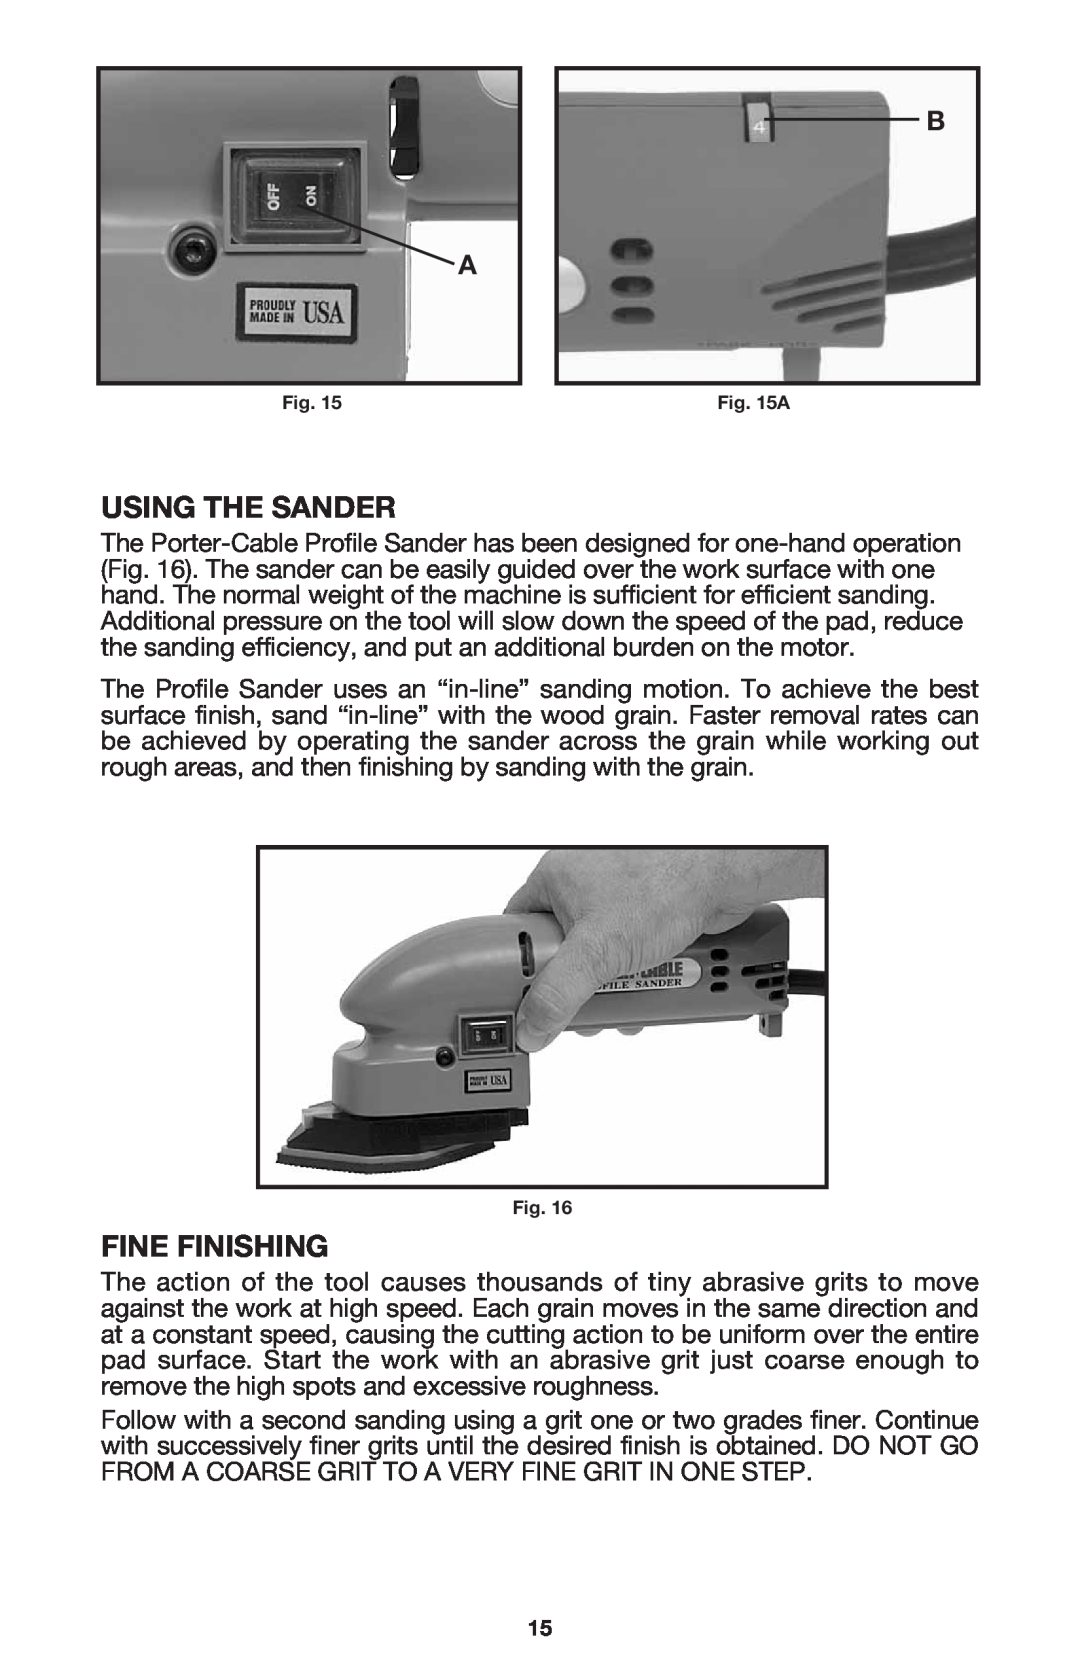 Porter-Cable 444vs instruction manual Using The Sander, Fine Finishing 